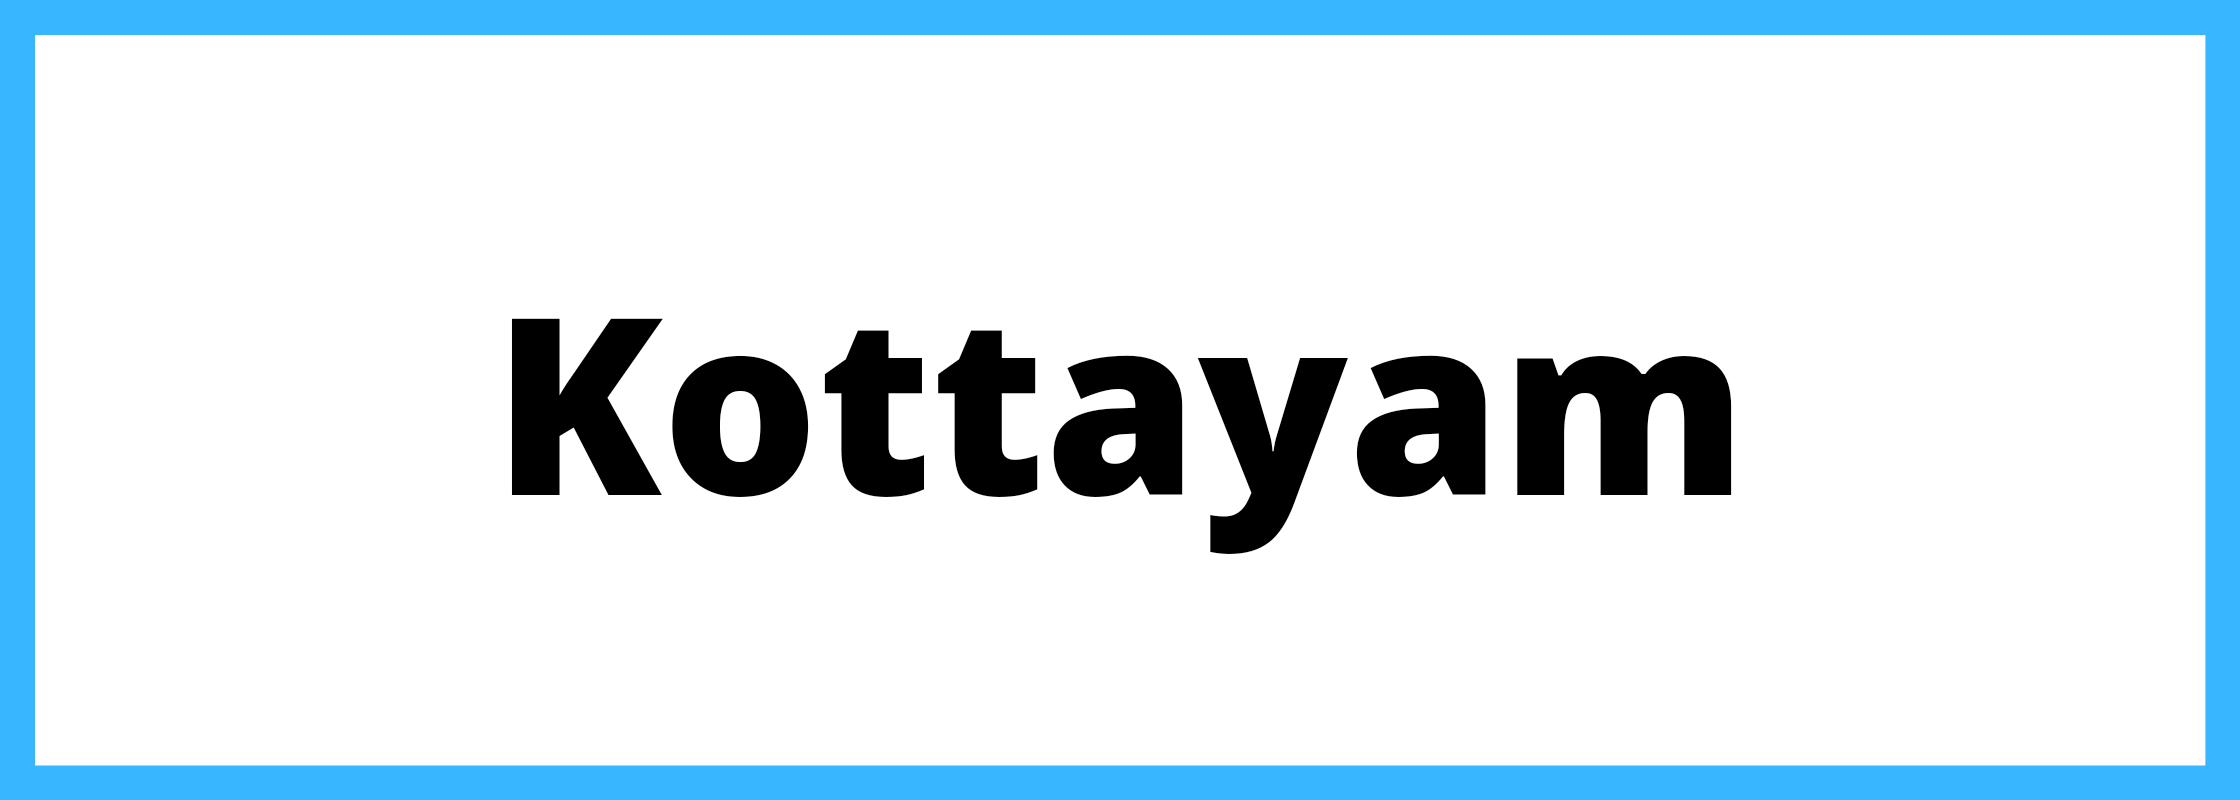 कोट्टयम-Kottayam-mandi-bhav